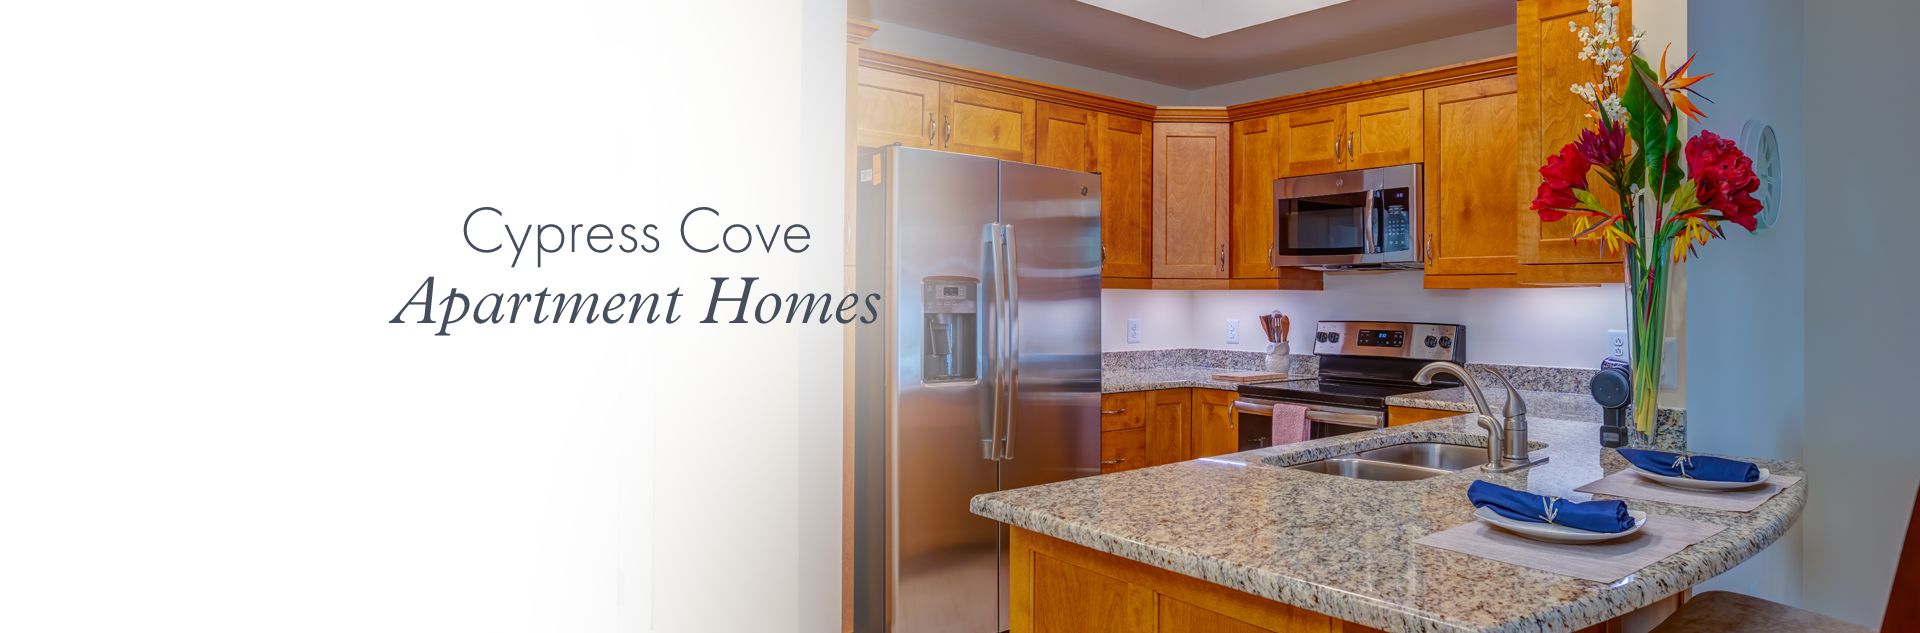 Cypress Cove Apartment Homes